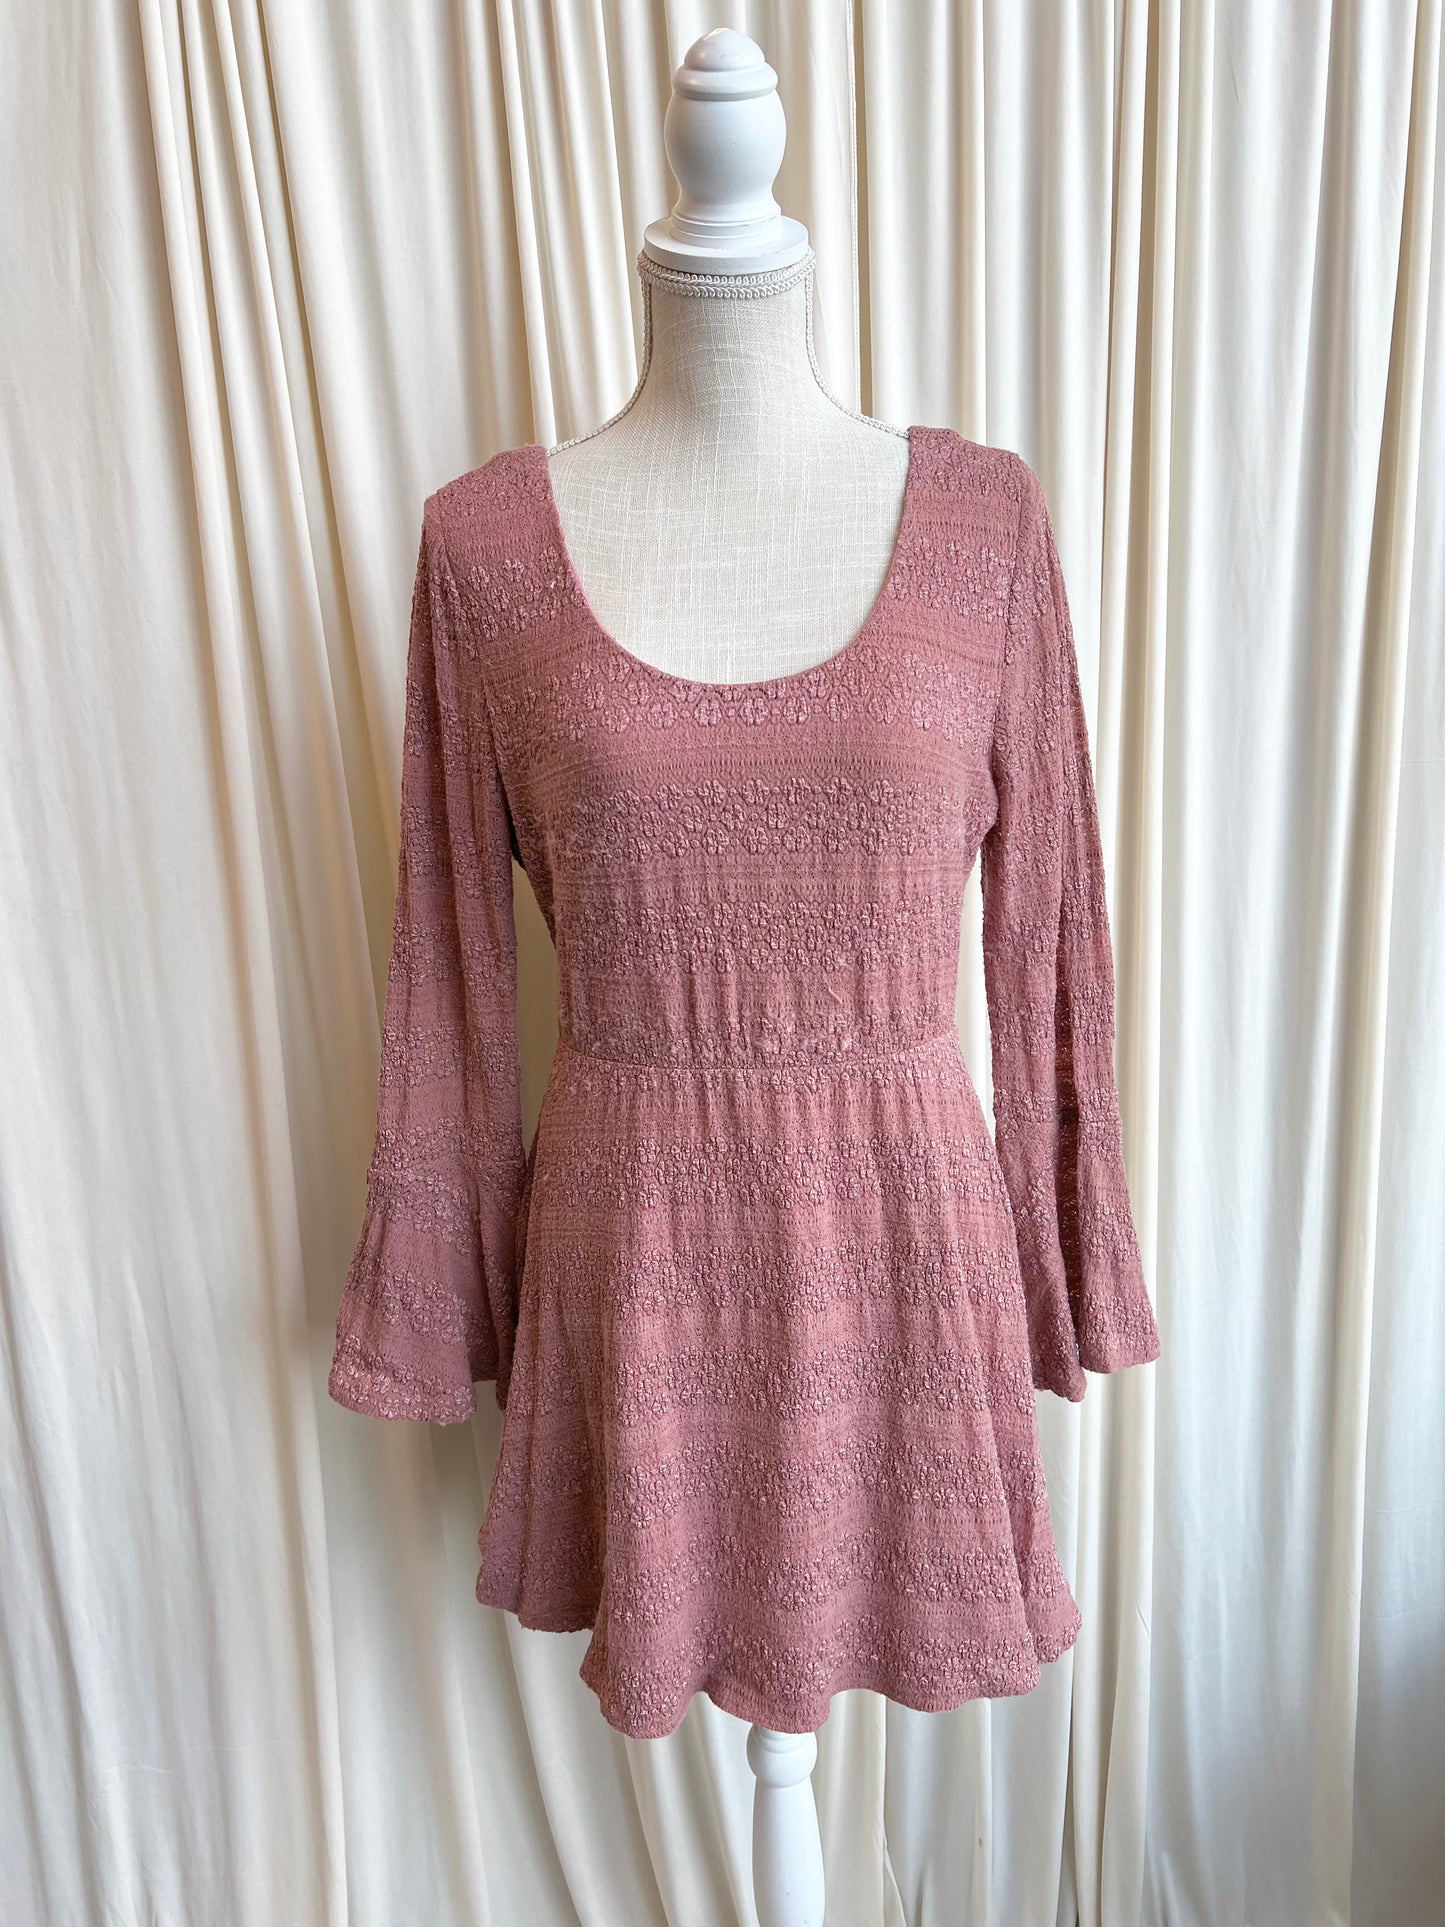 Pink Long Sleeve Lace Dress - Large